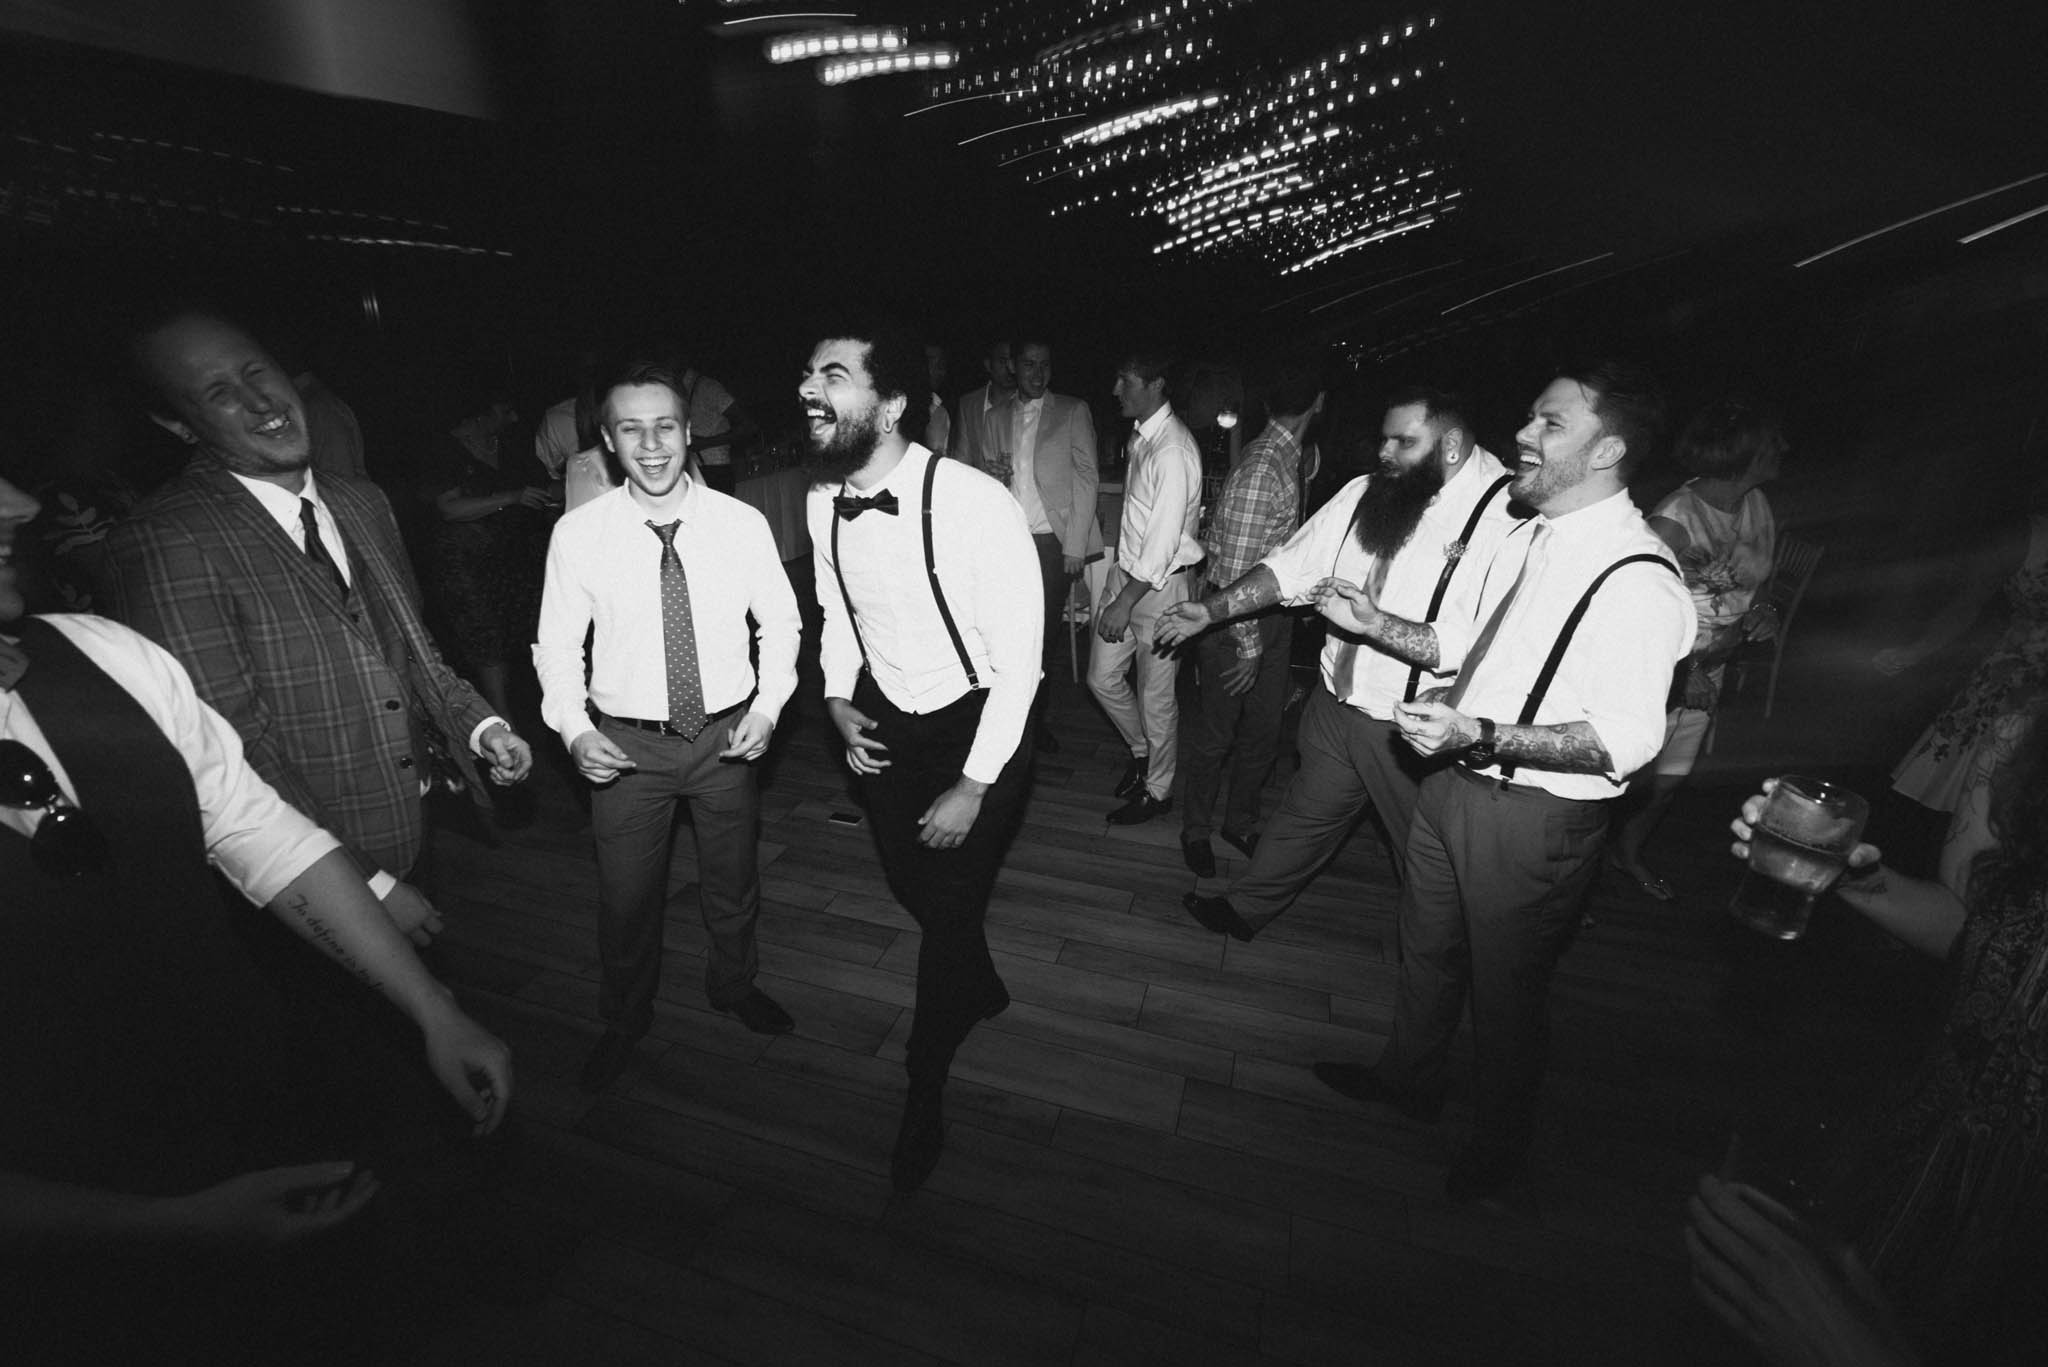 dancing2-wedding-blog-scott-stockwell-photography-end-2017.jpg